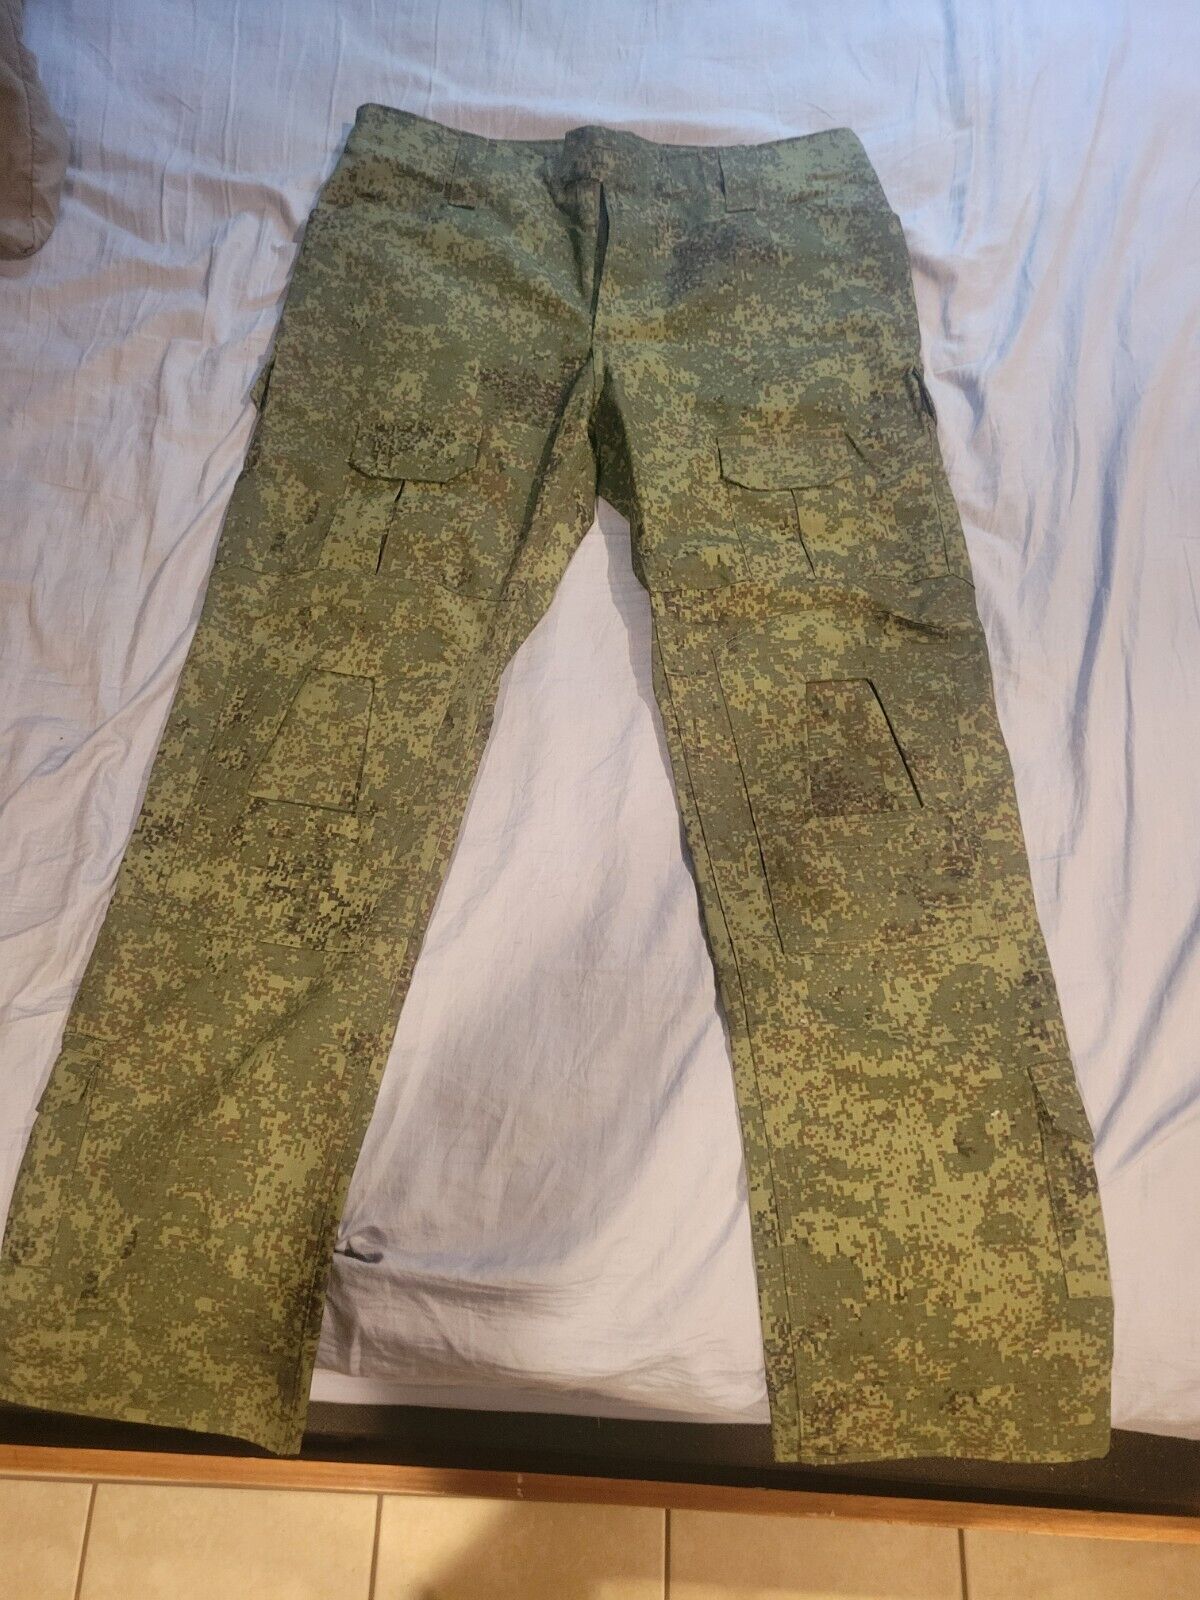 Russian Digital Flora Camo Pants Size 40 Xl (Fits 38)